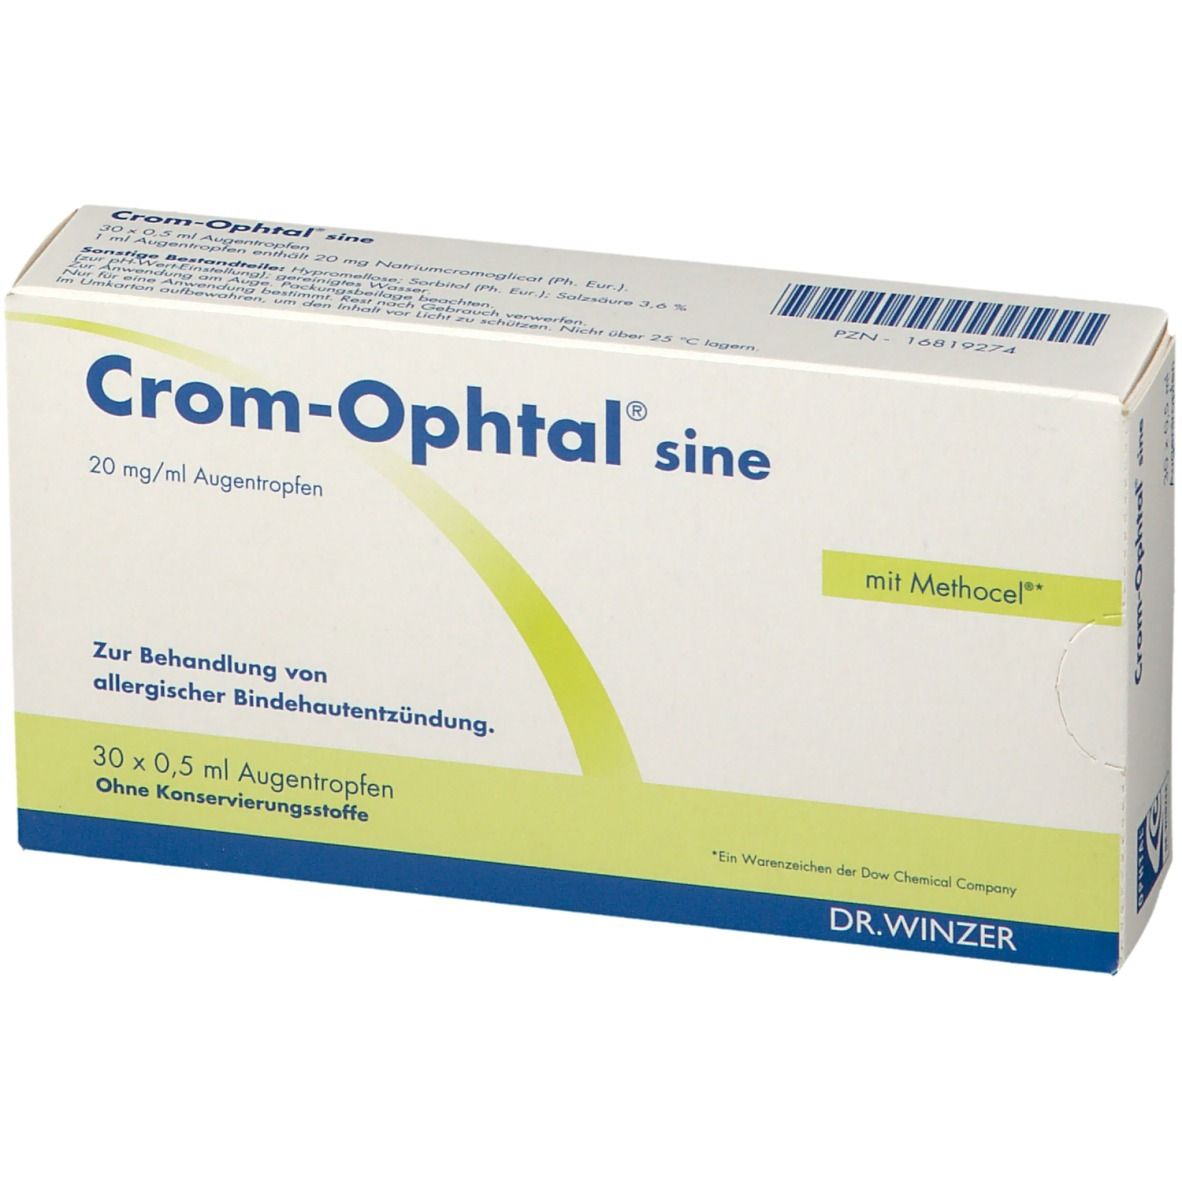 Crom-Opthal® sine